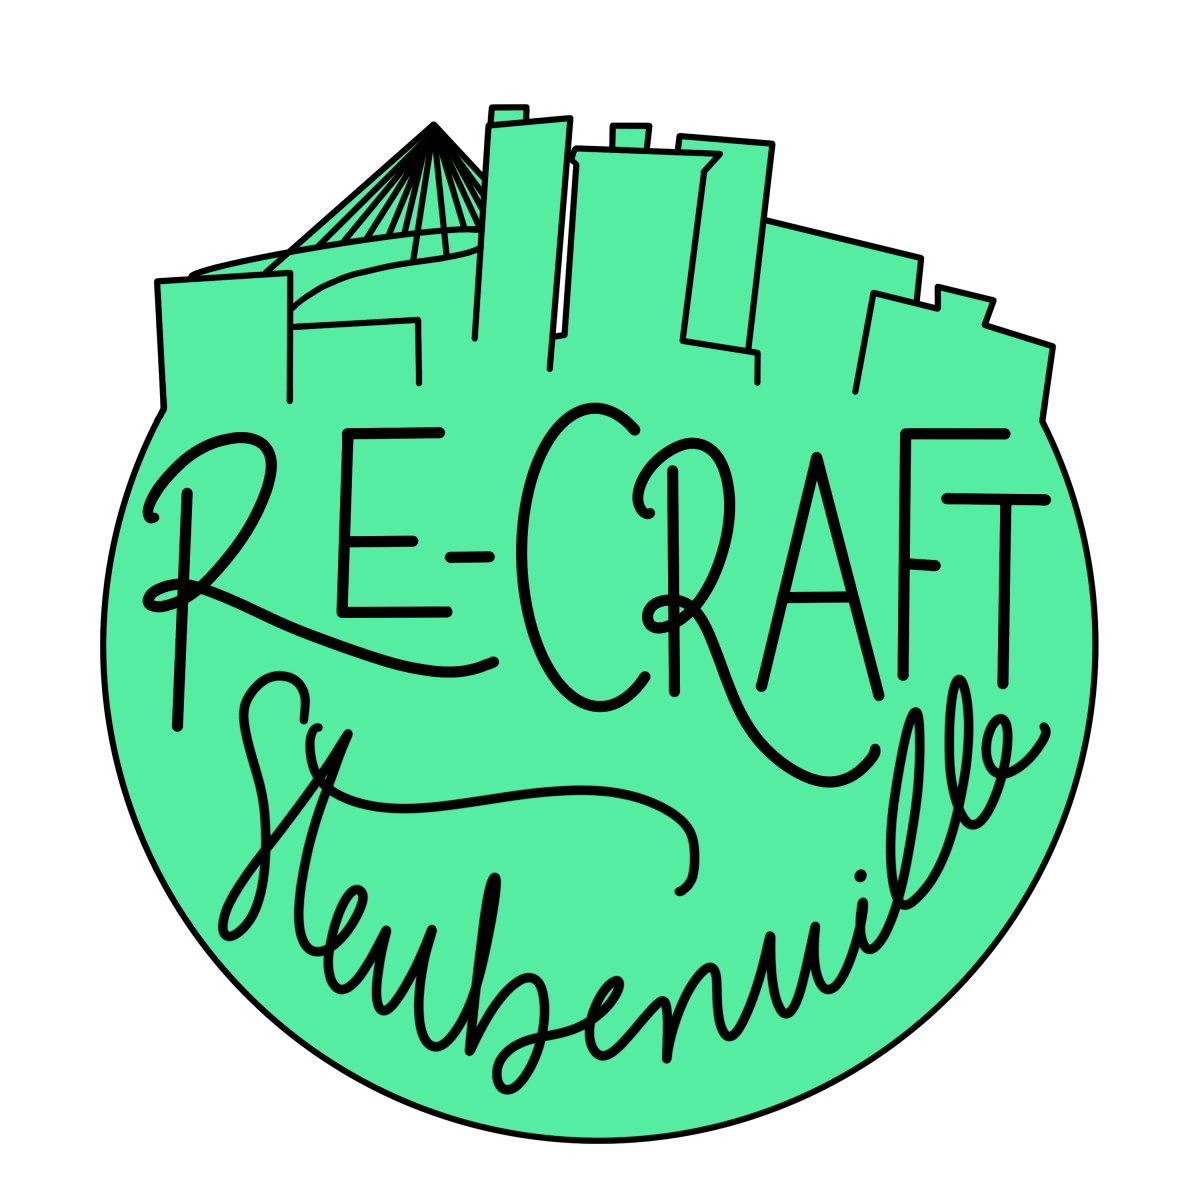 Re-Craft Steubenville